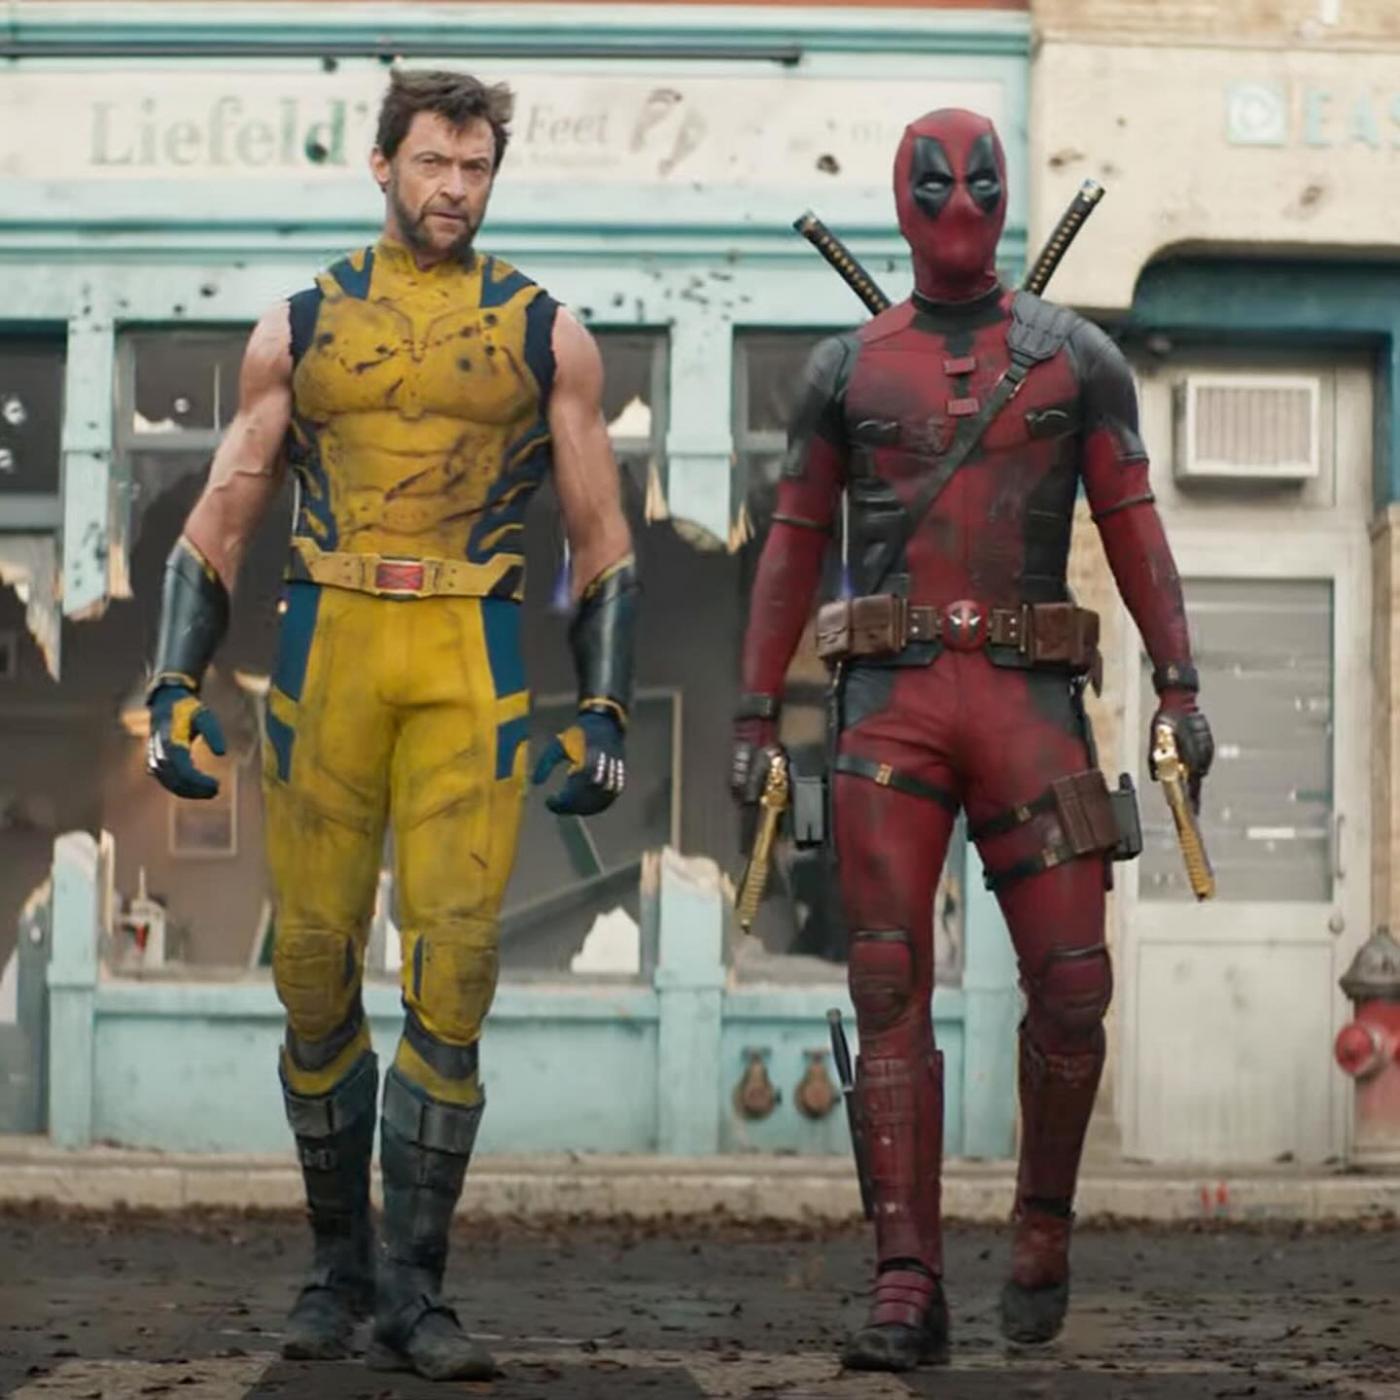 Deadpool e Wolverine tem estimativa alta de Bilheteria